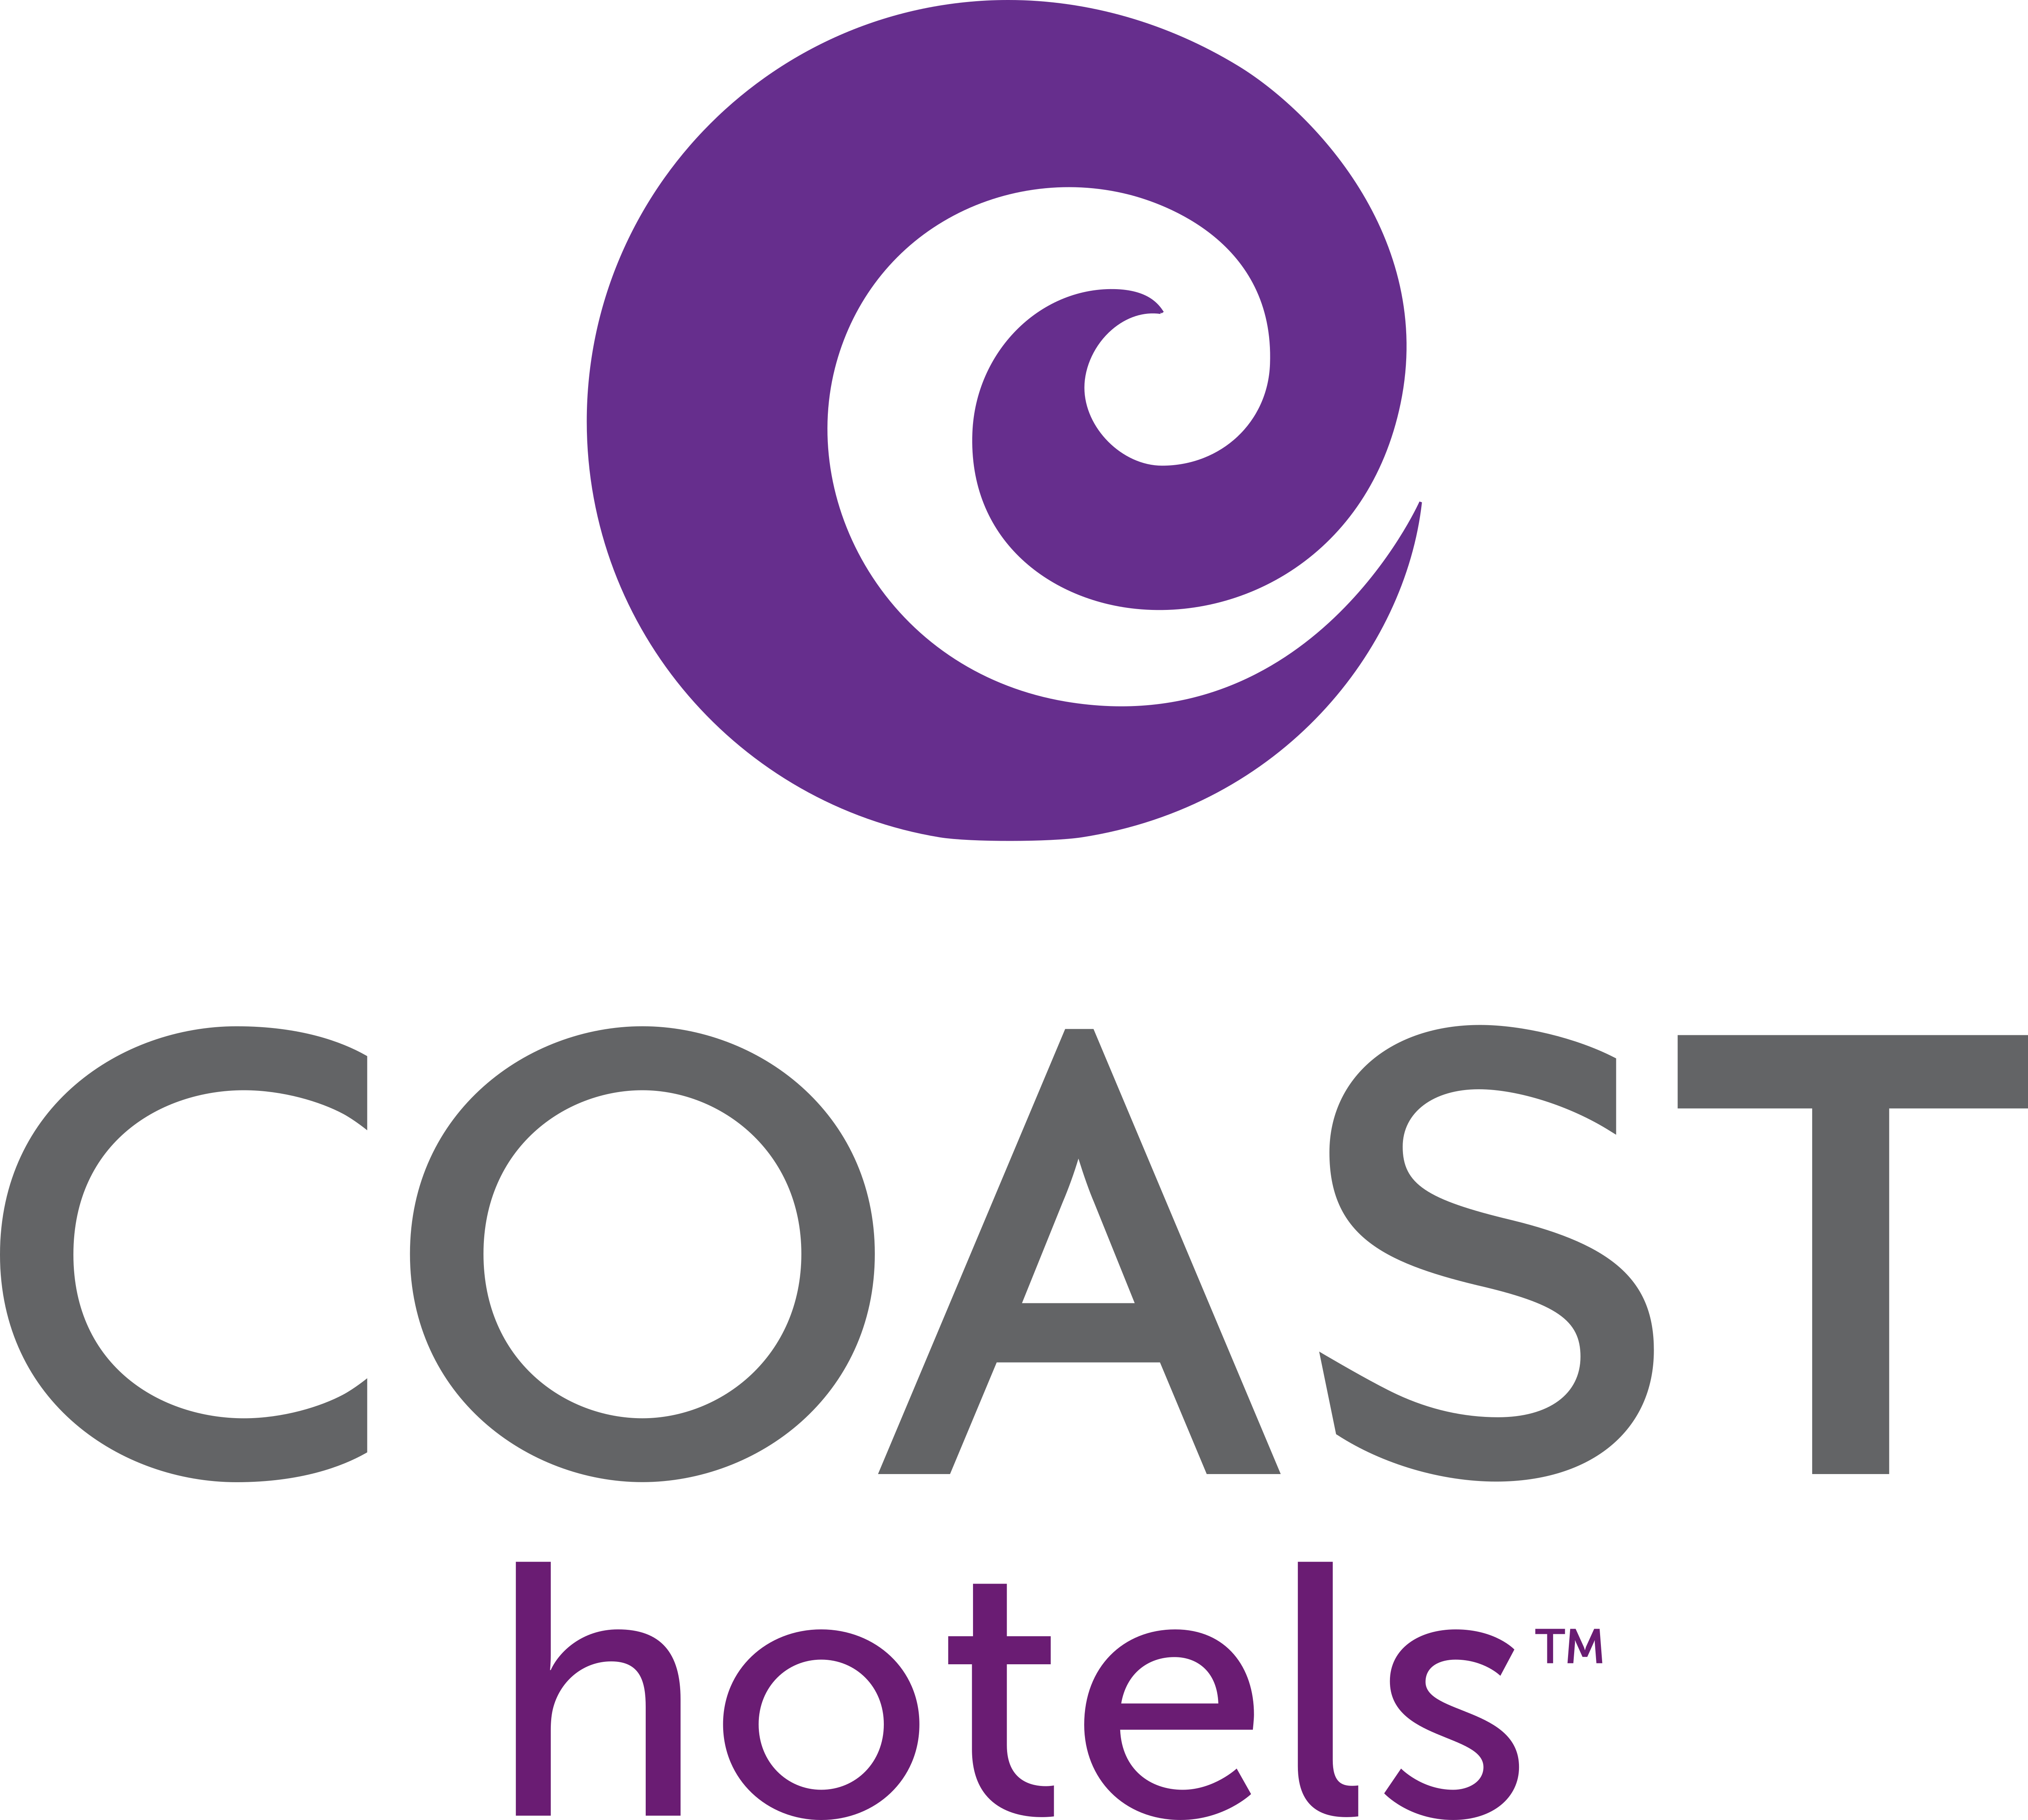 Coast Hotels  Logos  Download